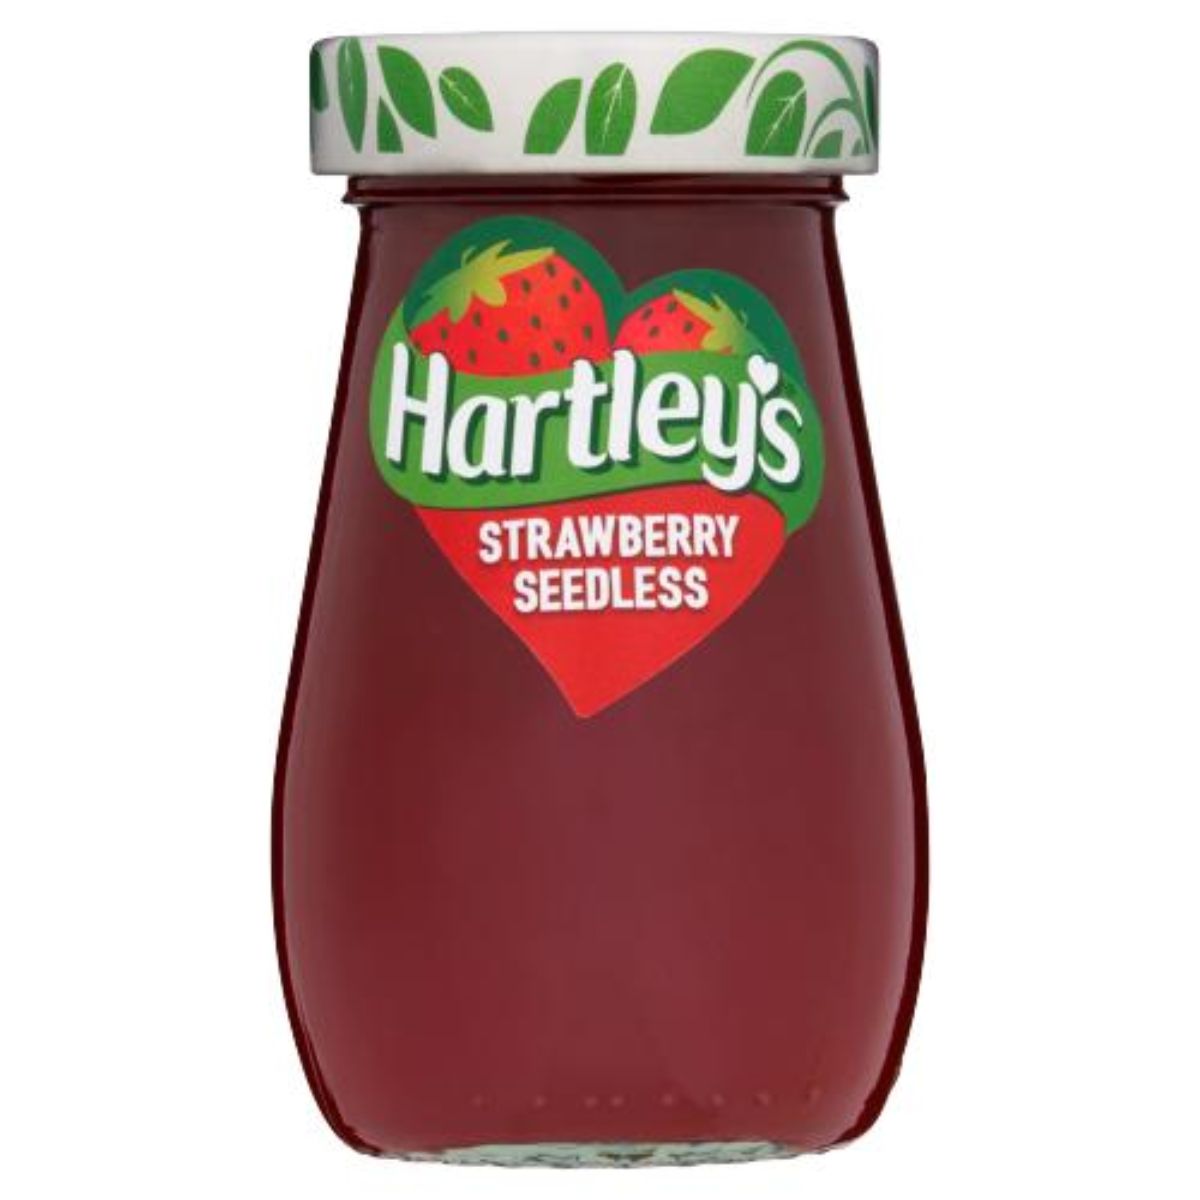 A jar of Hartleys - Strawberry Seedless - 300g jam.